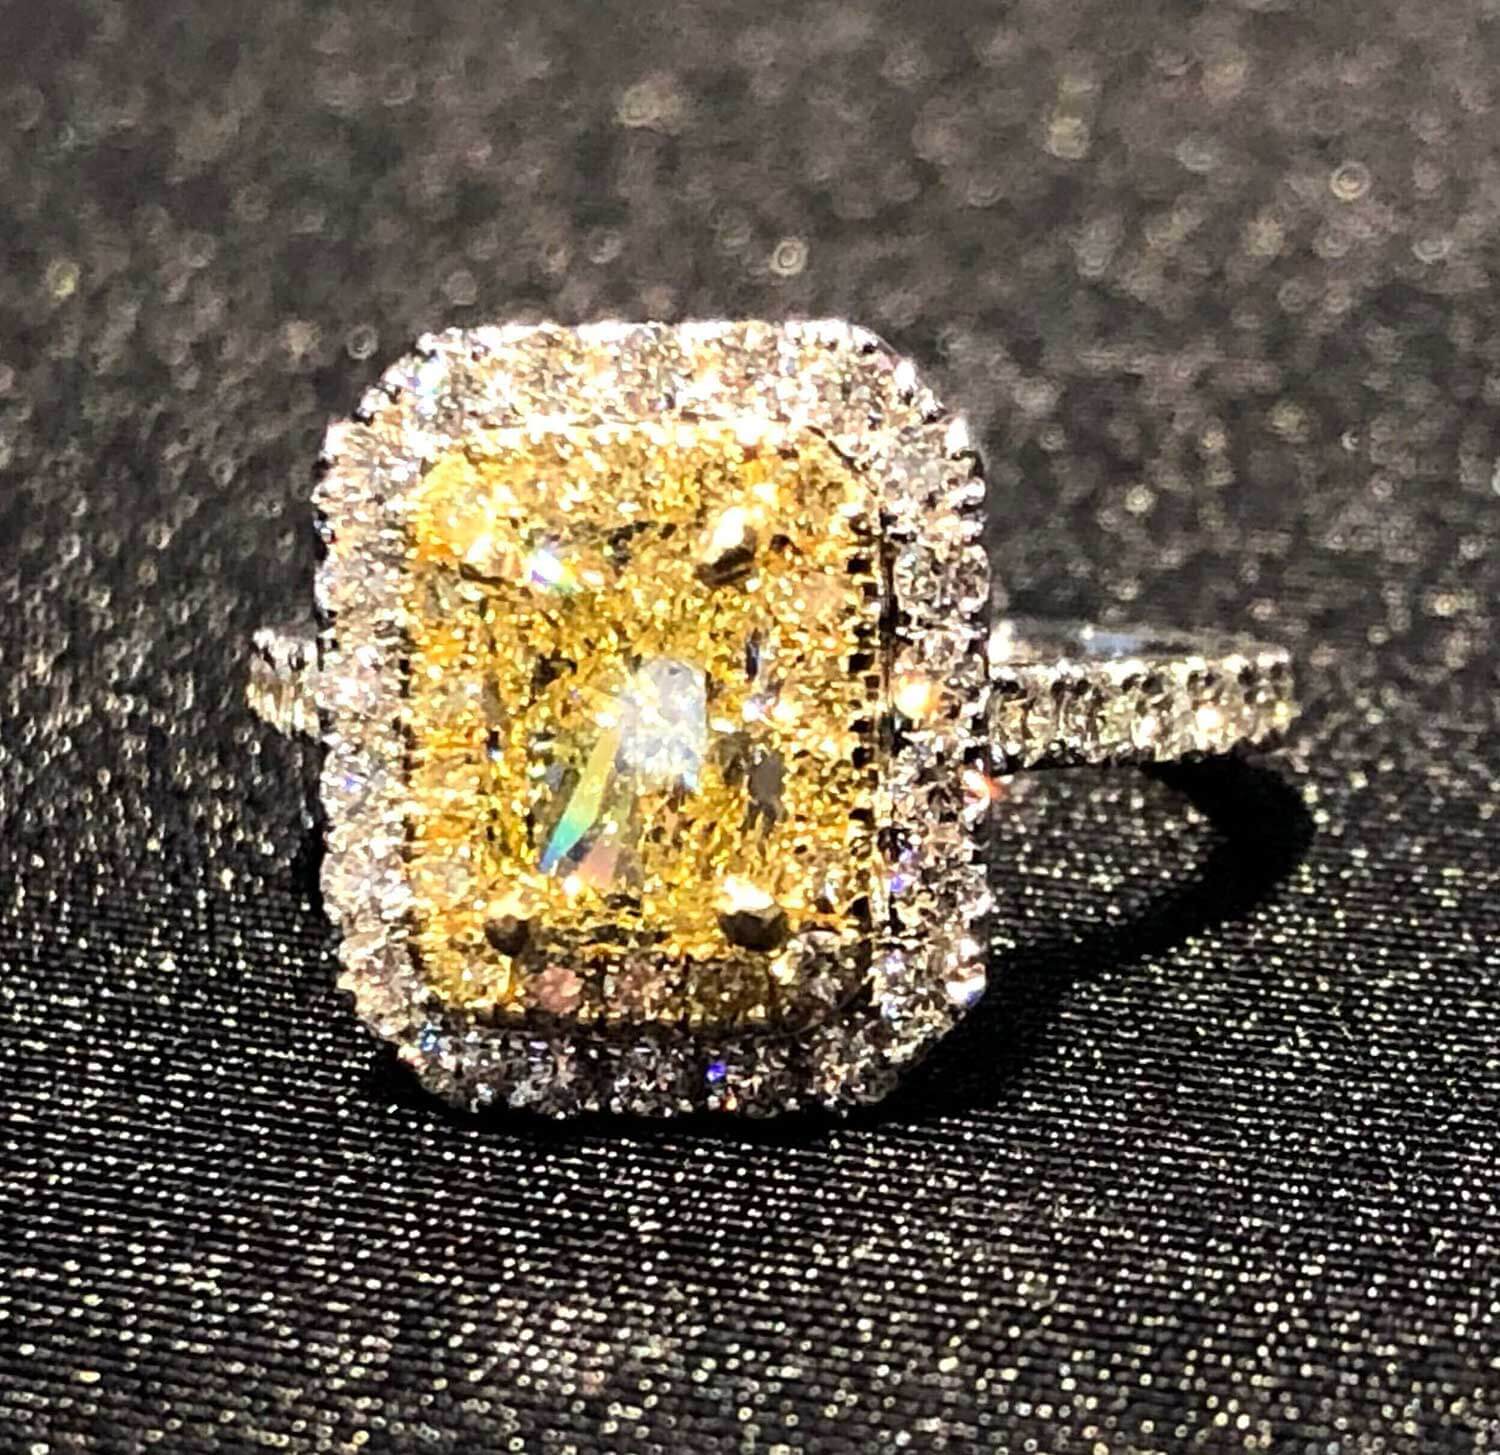 Montreal diamond ring jewels-3